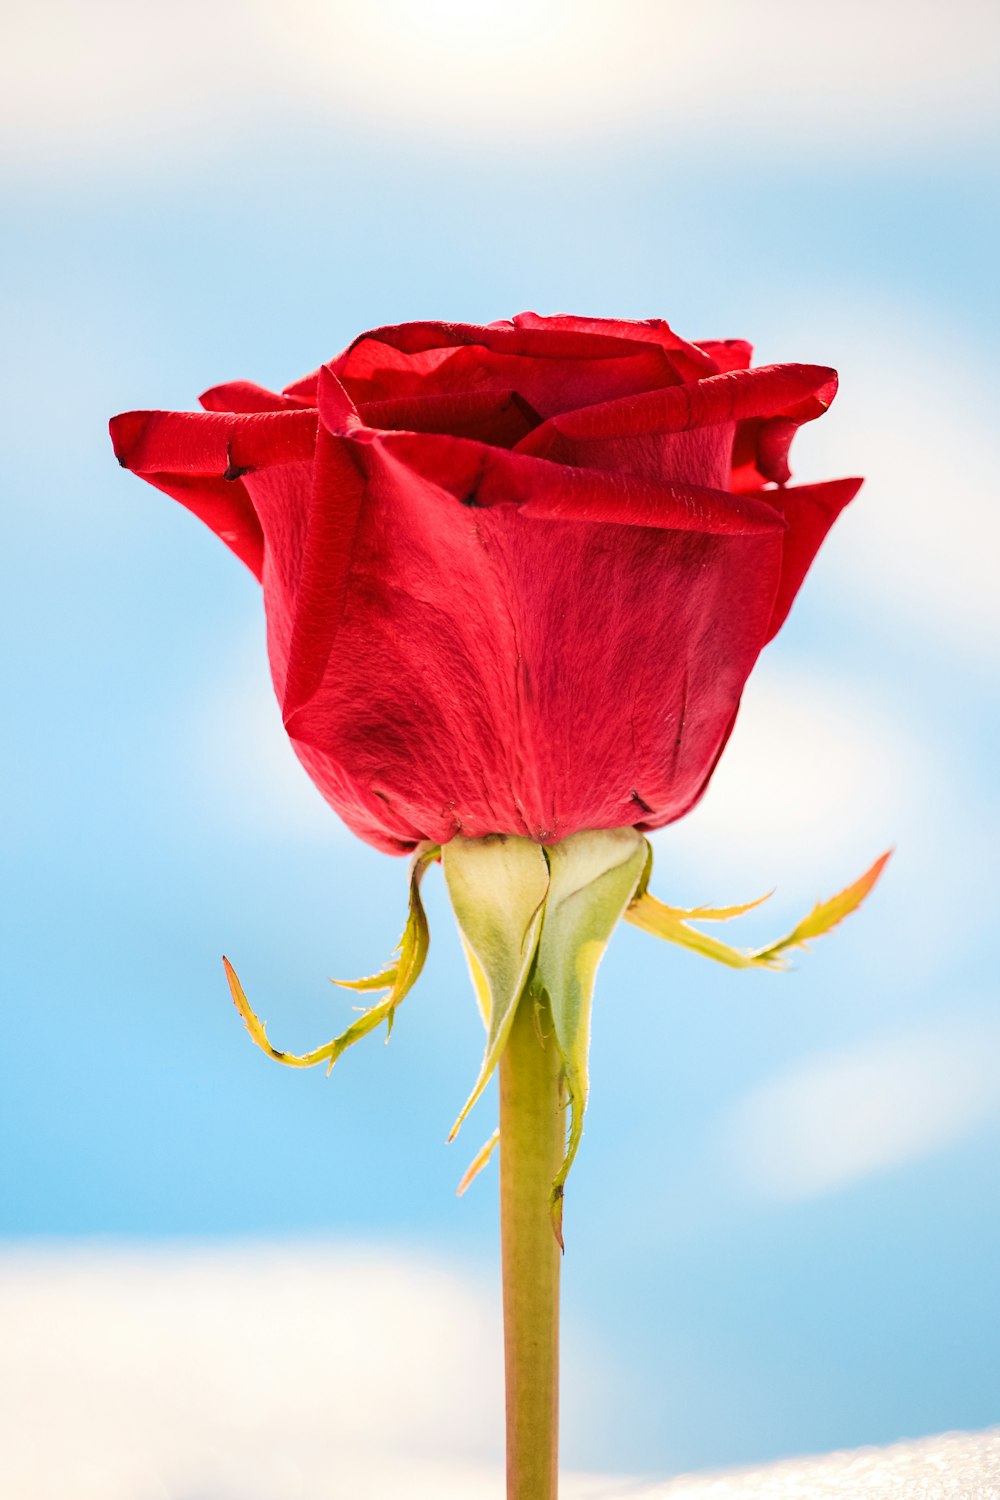 Red rose photo – Free Flower Image on Unsplash